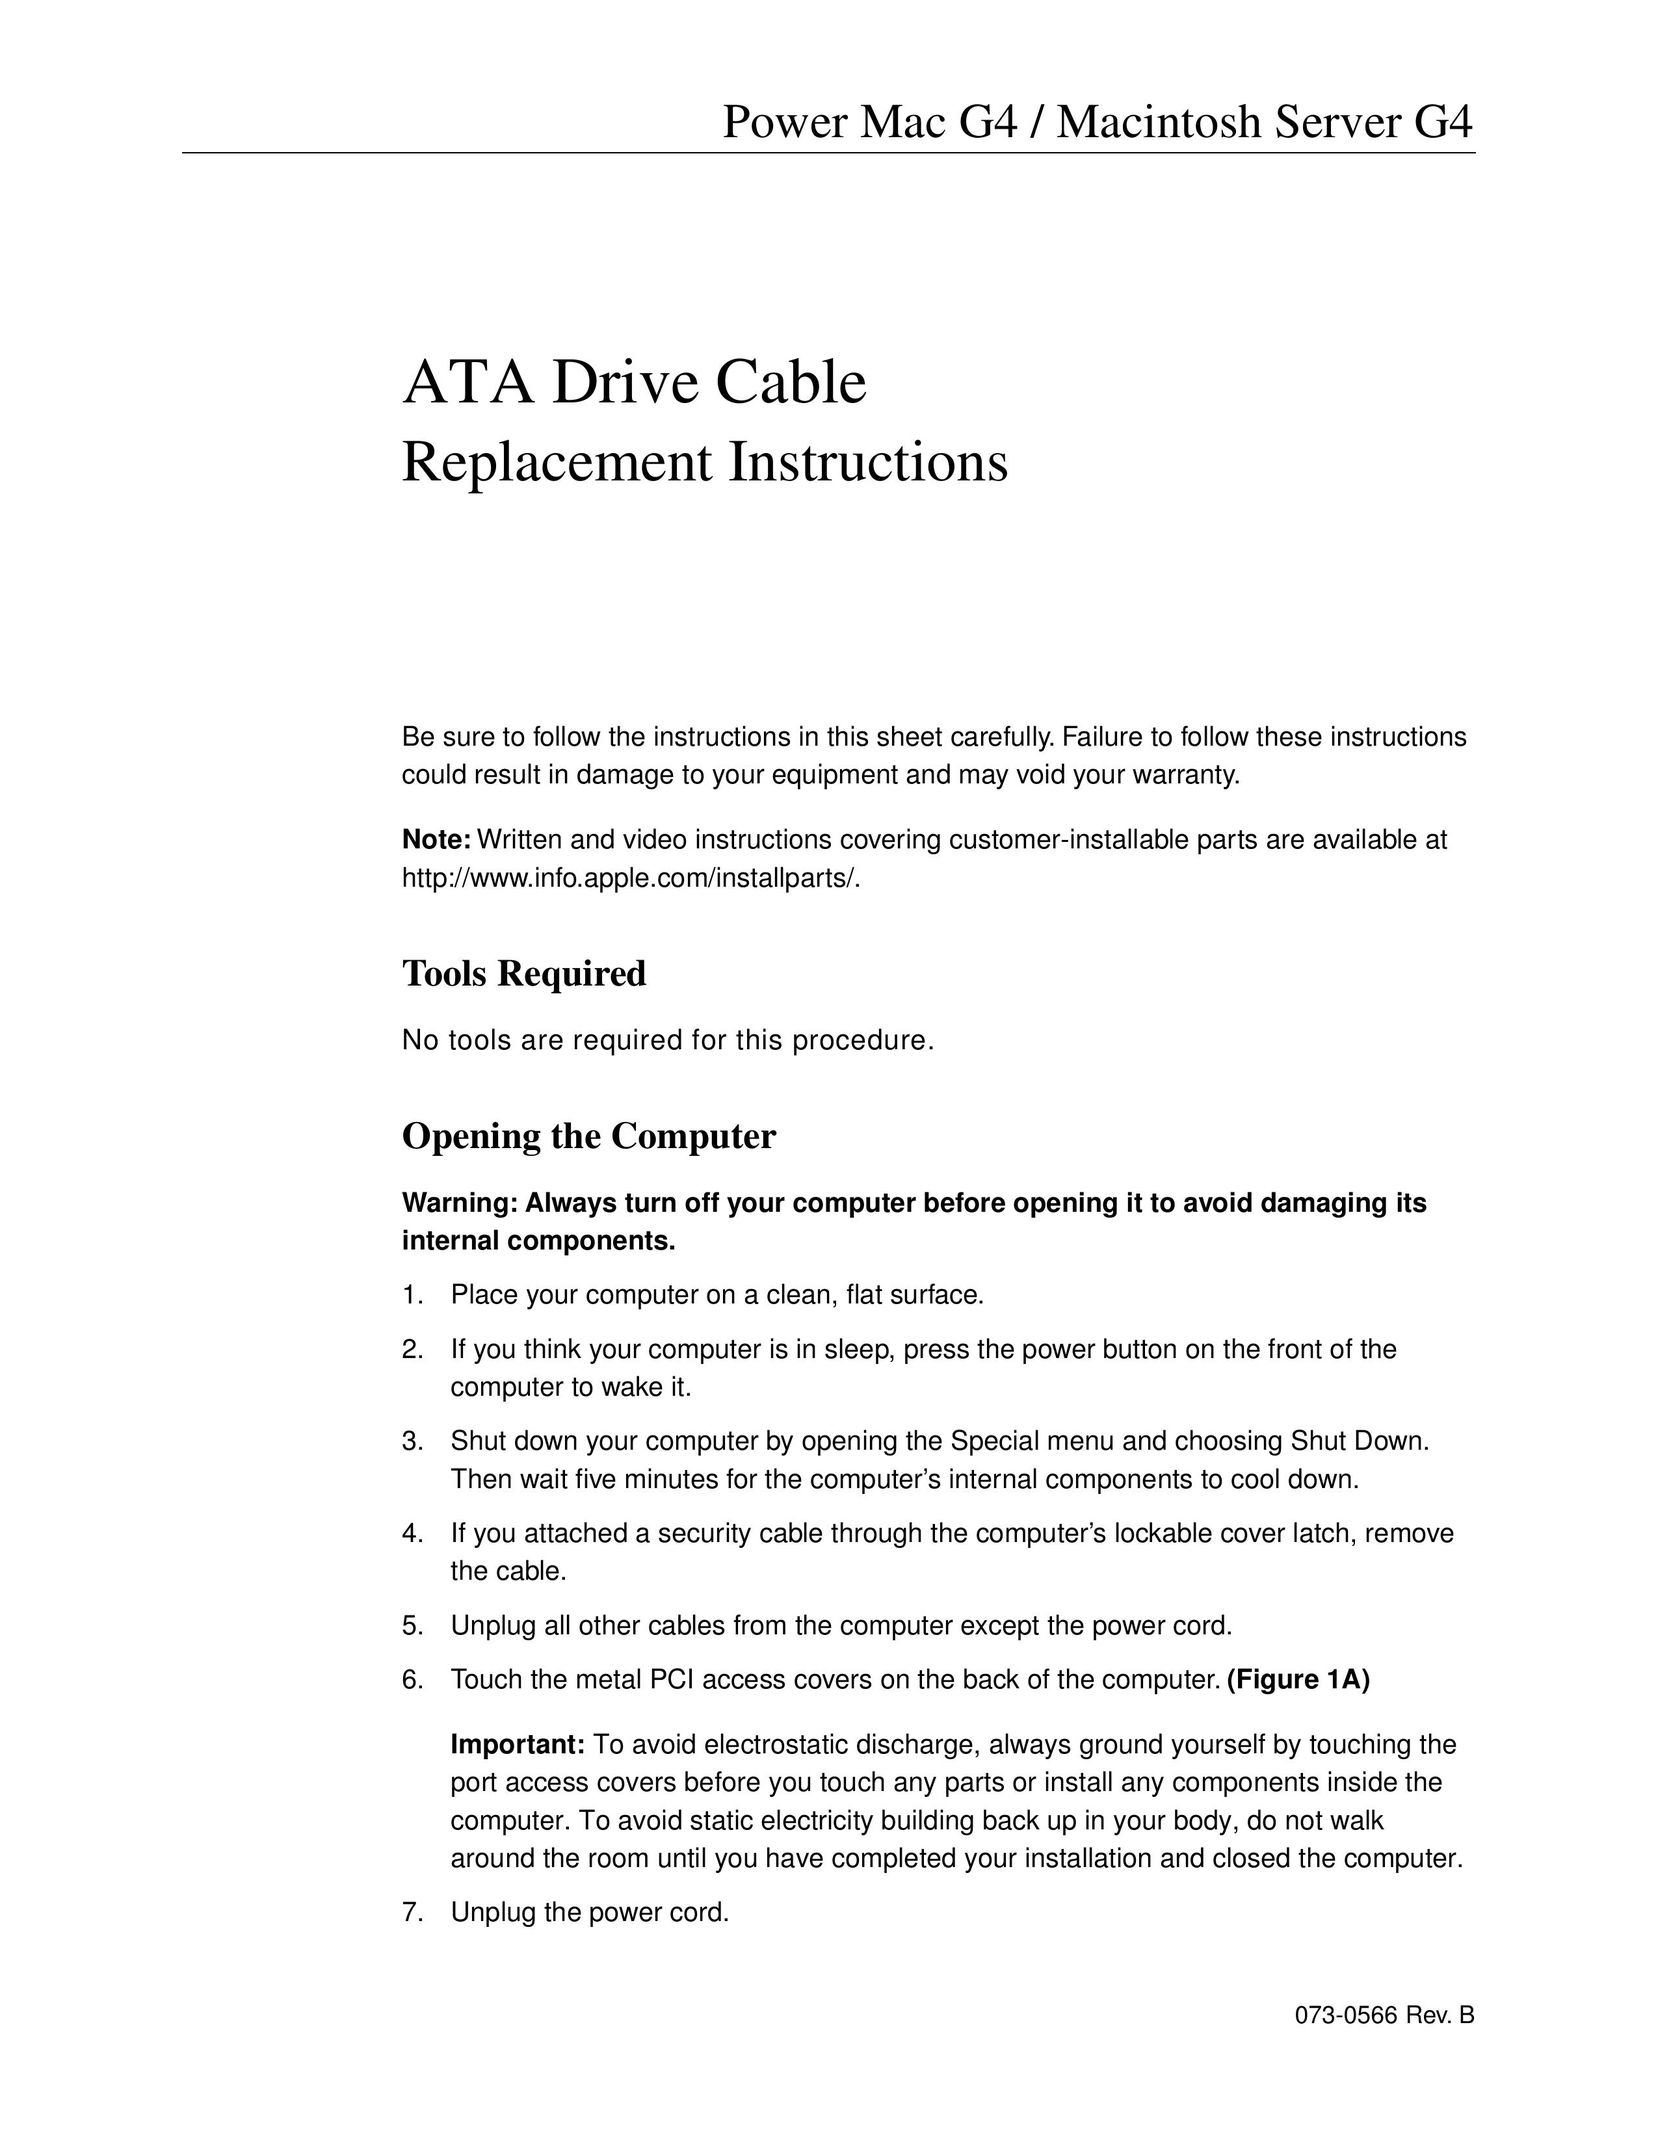 Apple ATA Drive Cable Computer Hardware User Manual